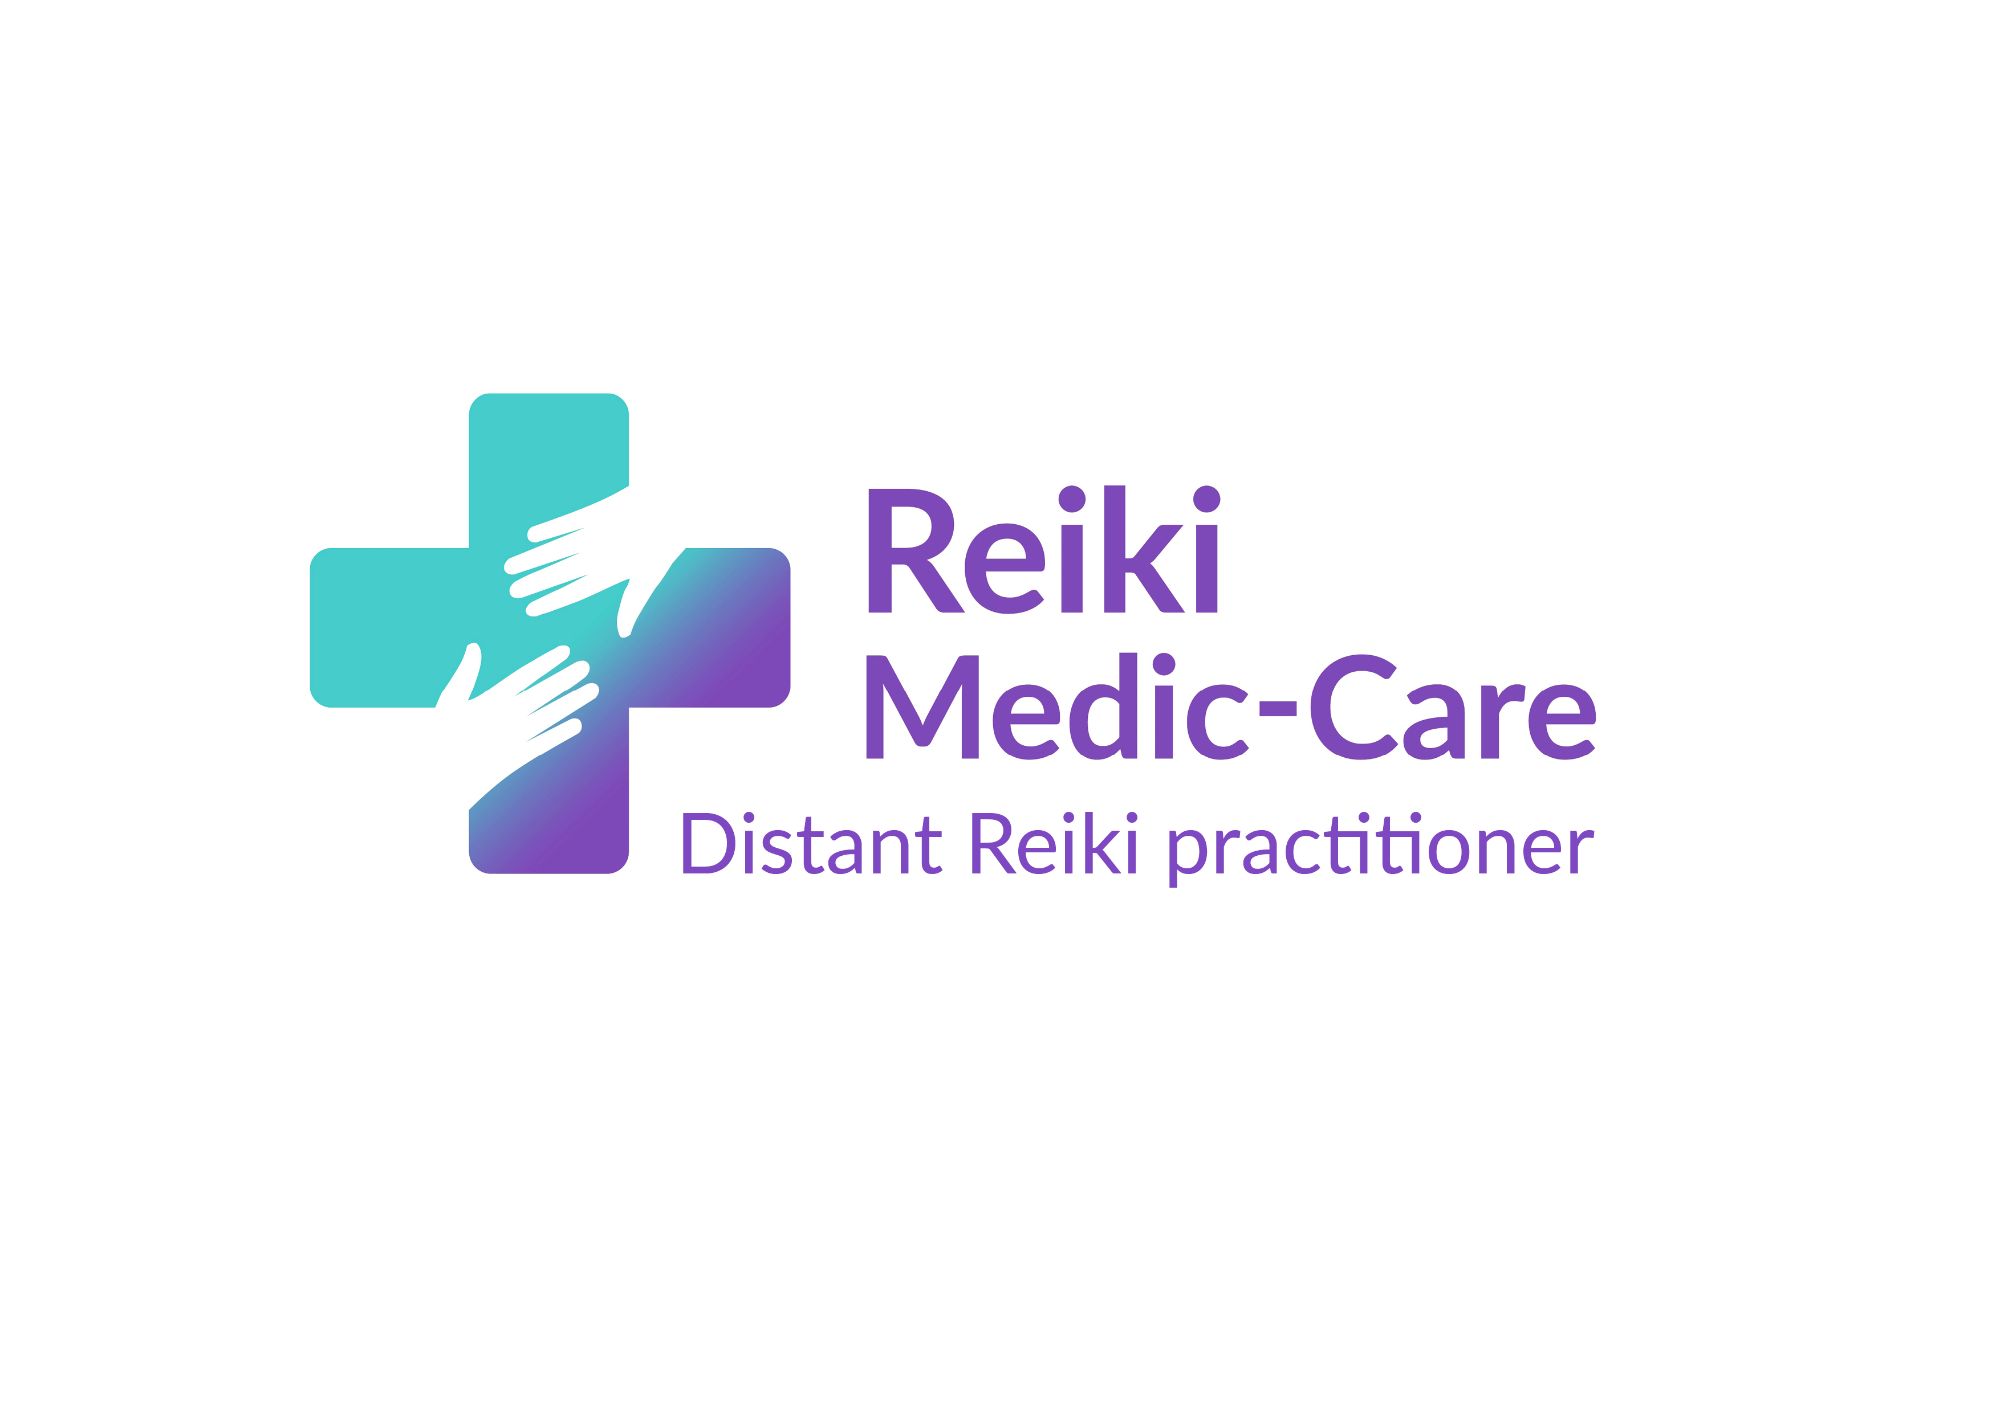 Reiki Medic-Care Distant Reiki Practitioner